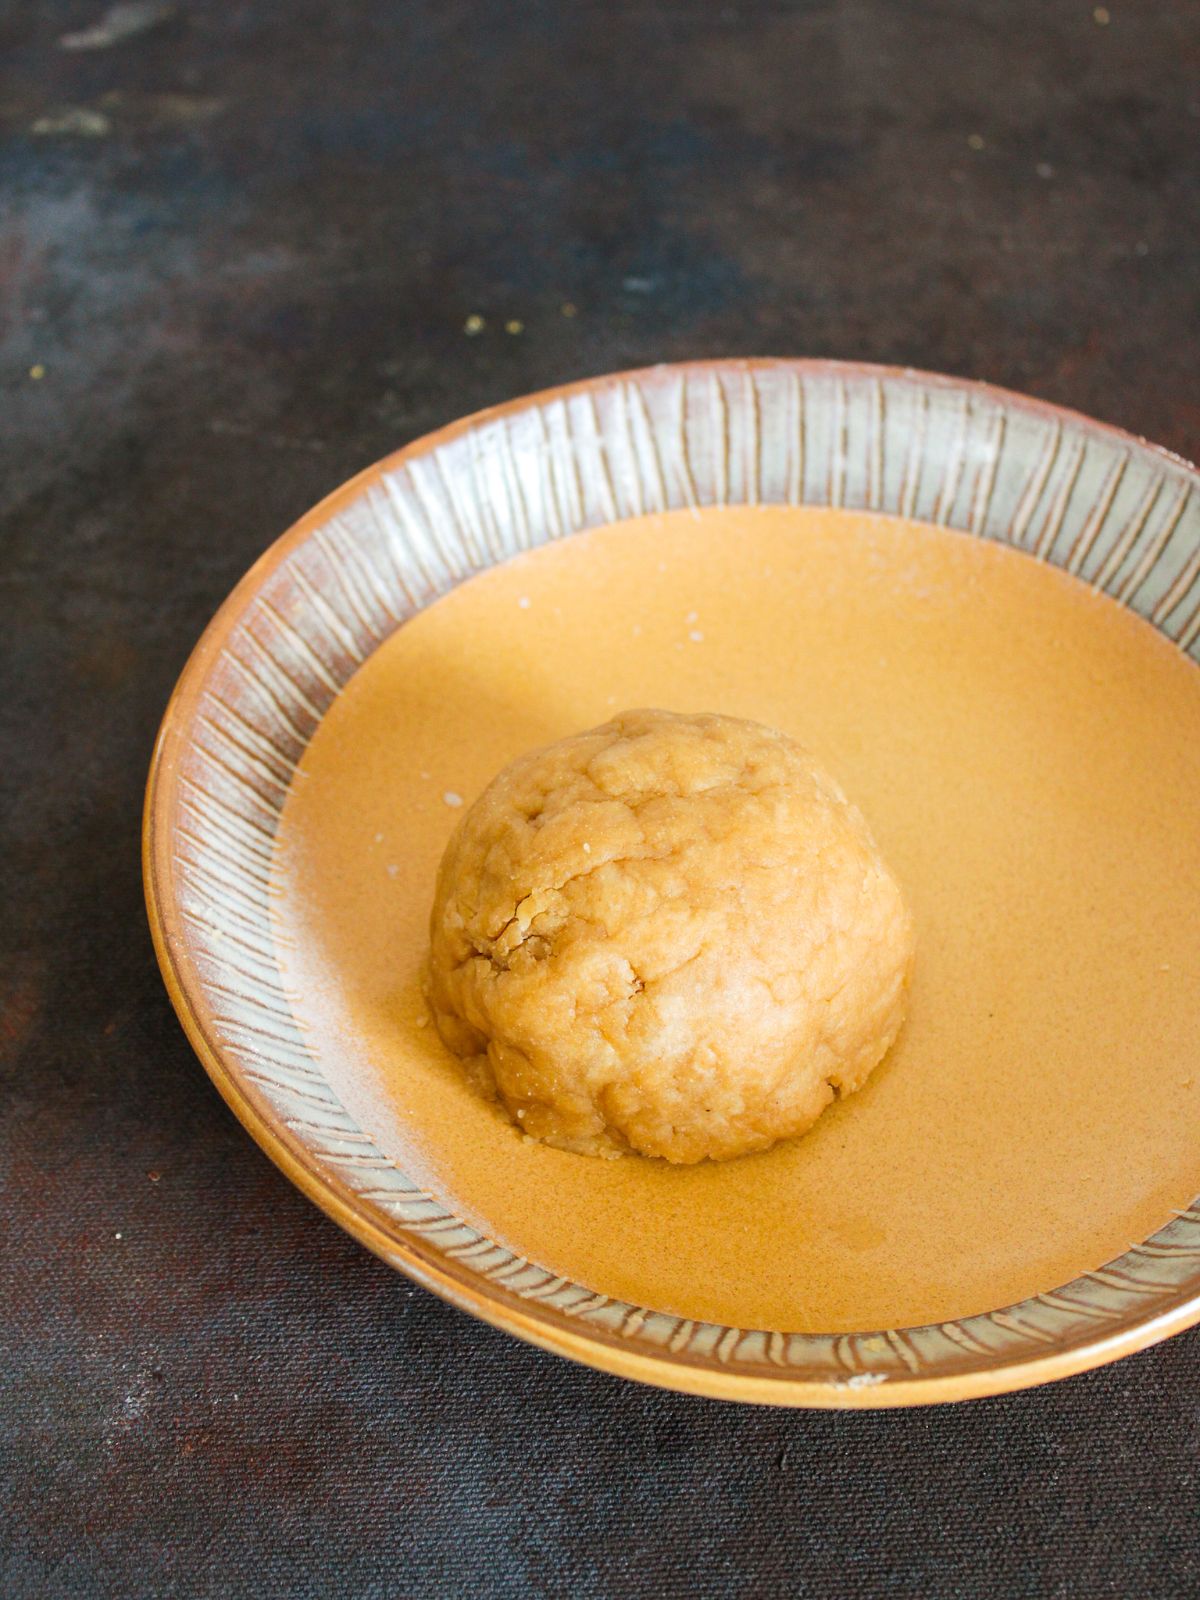 Ball of dough on plate